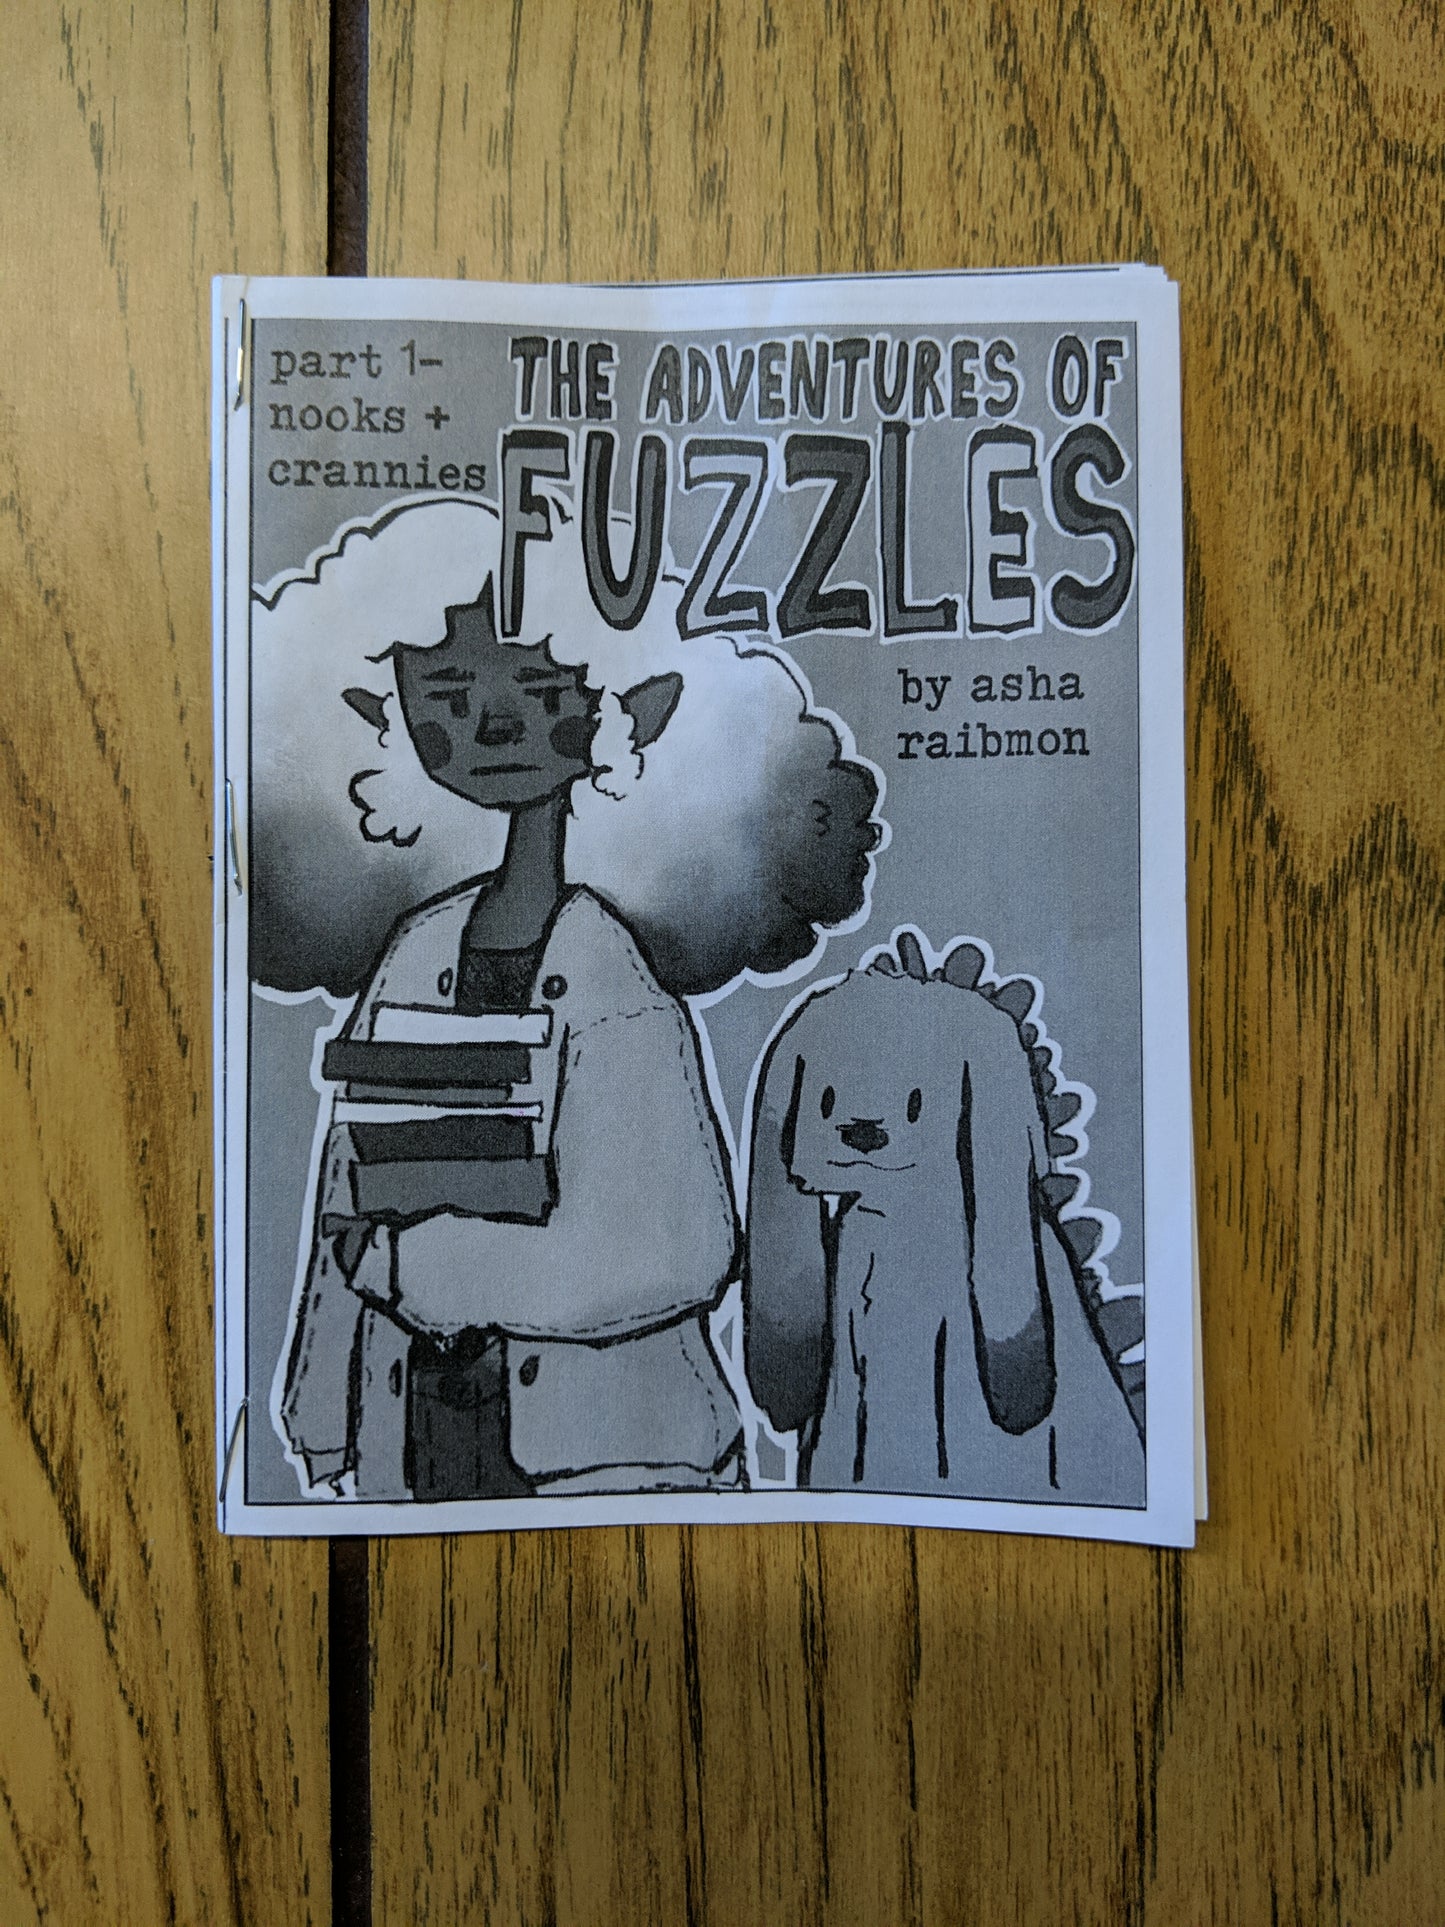 The Adventures of Fuzzles: Part 1 - Nooks & Crannies